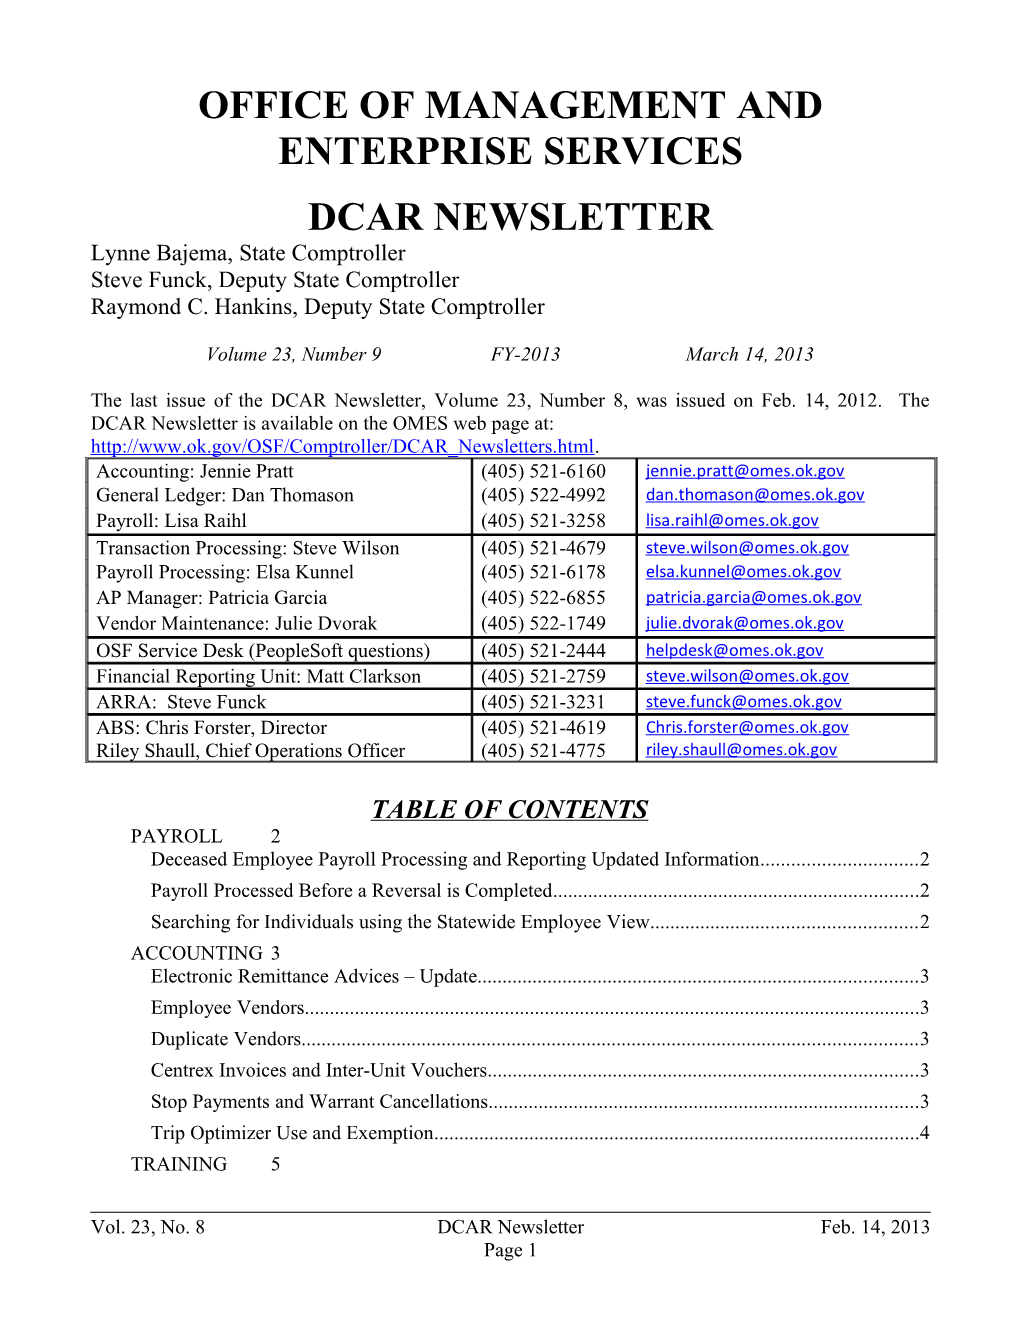 Office of Management and Enterprise Services (OMES) DCAR Newsletter, Jan. 11, 2013